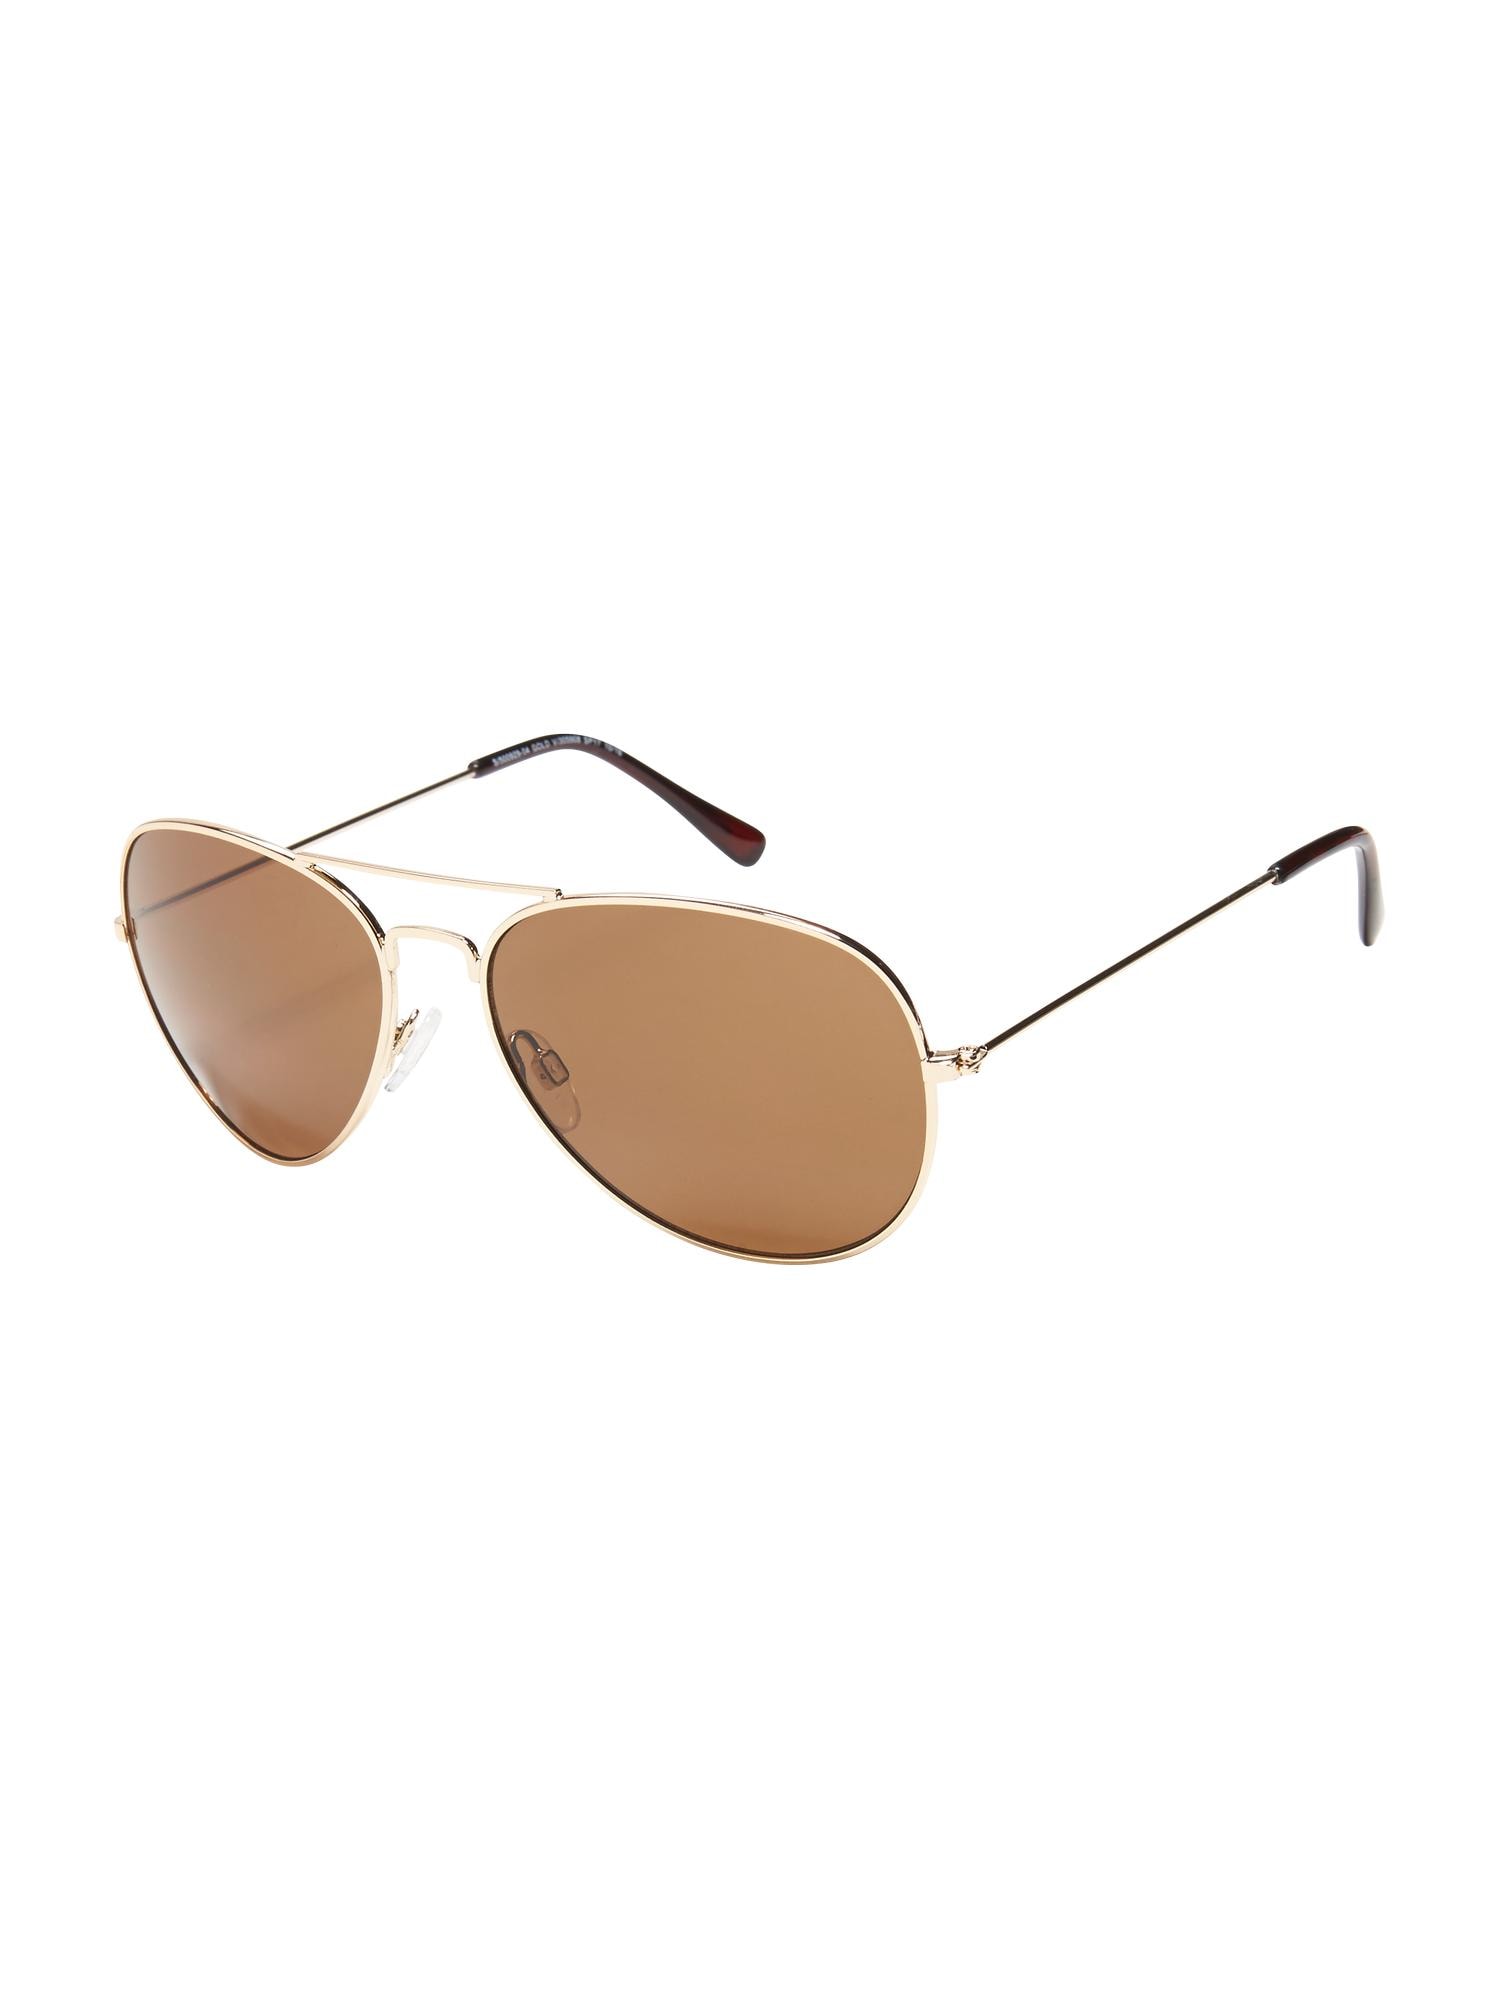 Classic Cat-Eye Sunglasses for Women | Old Navy